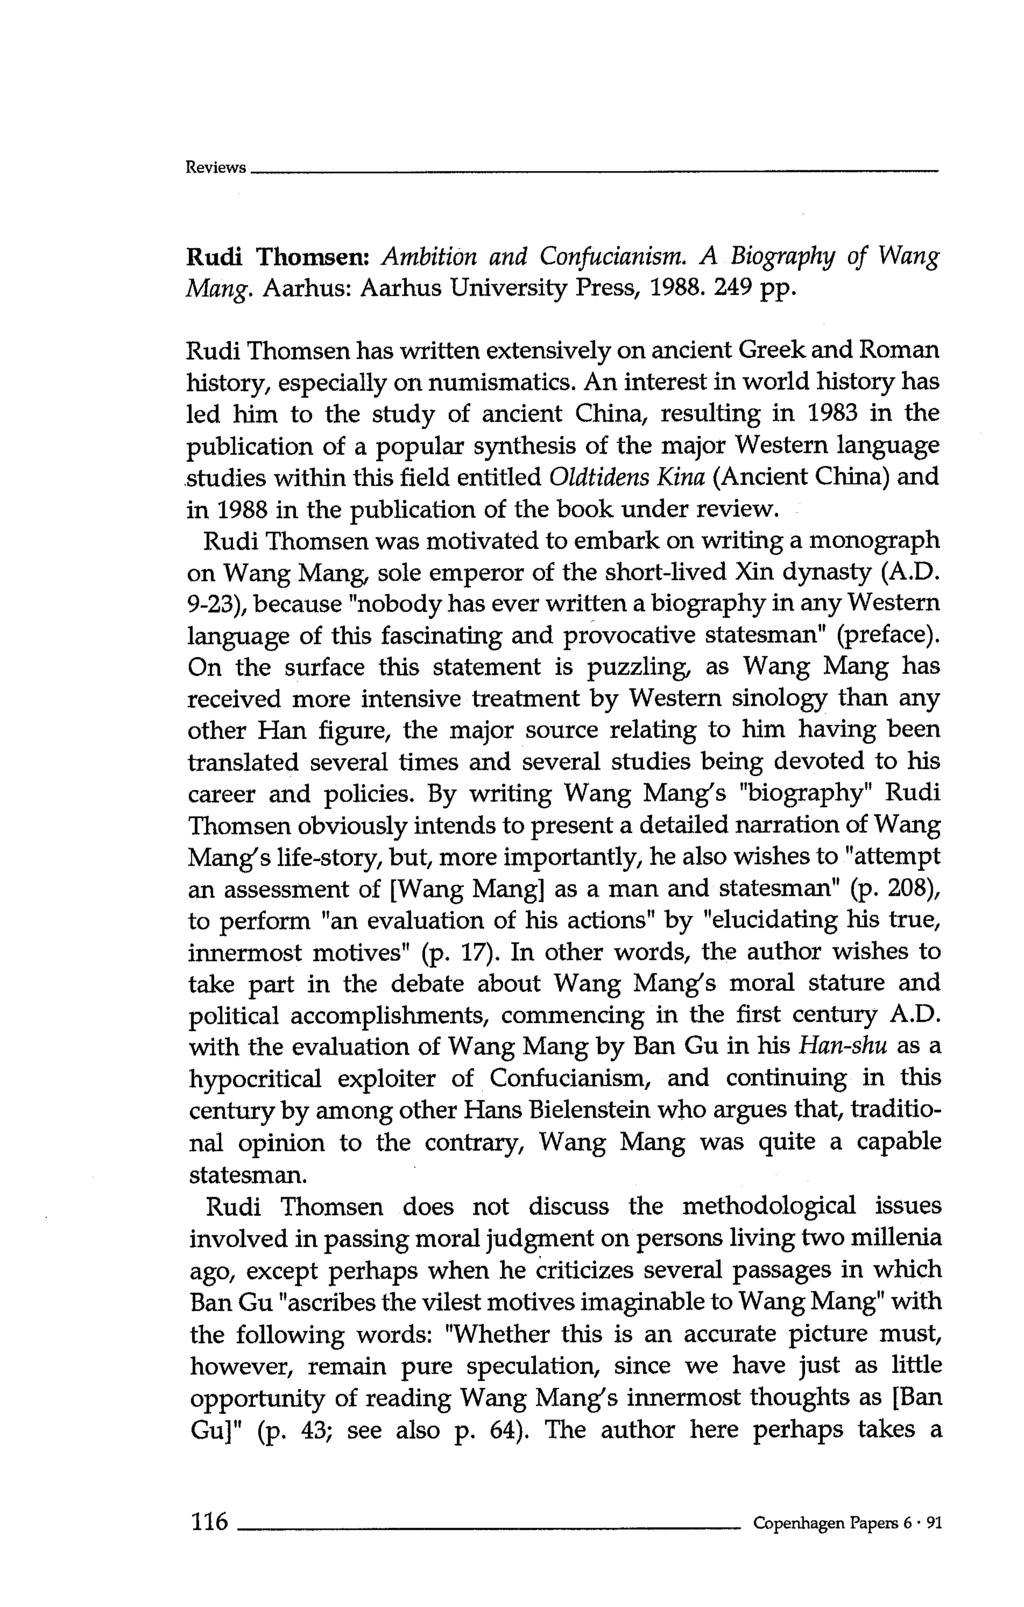 Rudi Thomsen: Ambition and Confucianism, A Biography of Wang Mang. Aarhus: Aarhus University Press, 1988. 249 pp.